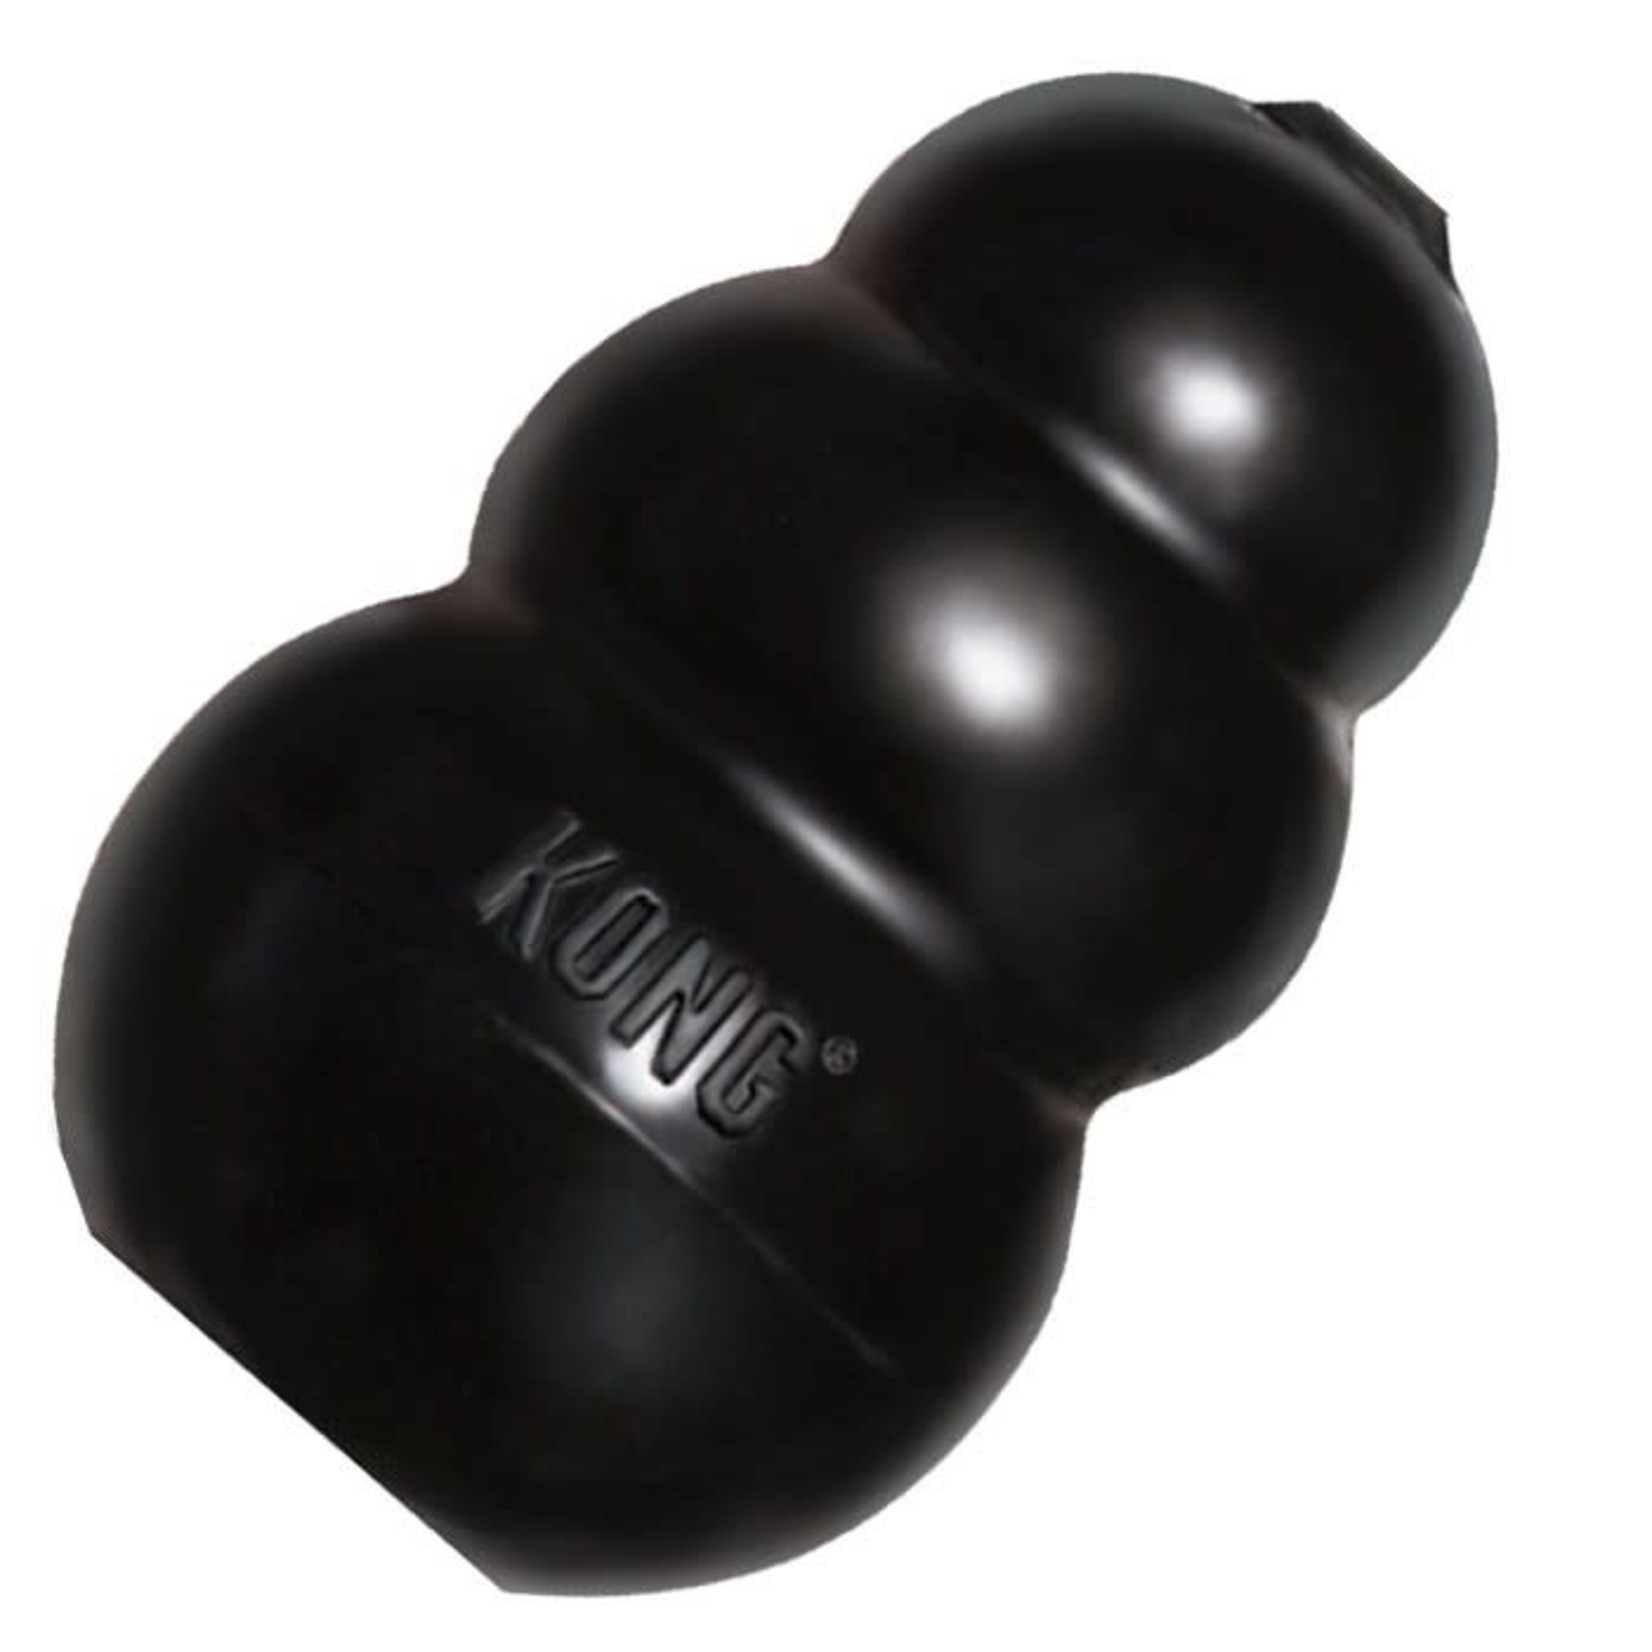 Kong KONG Black Extreme Kong Dog Toy